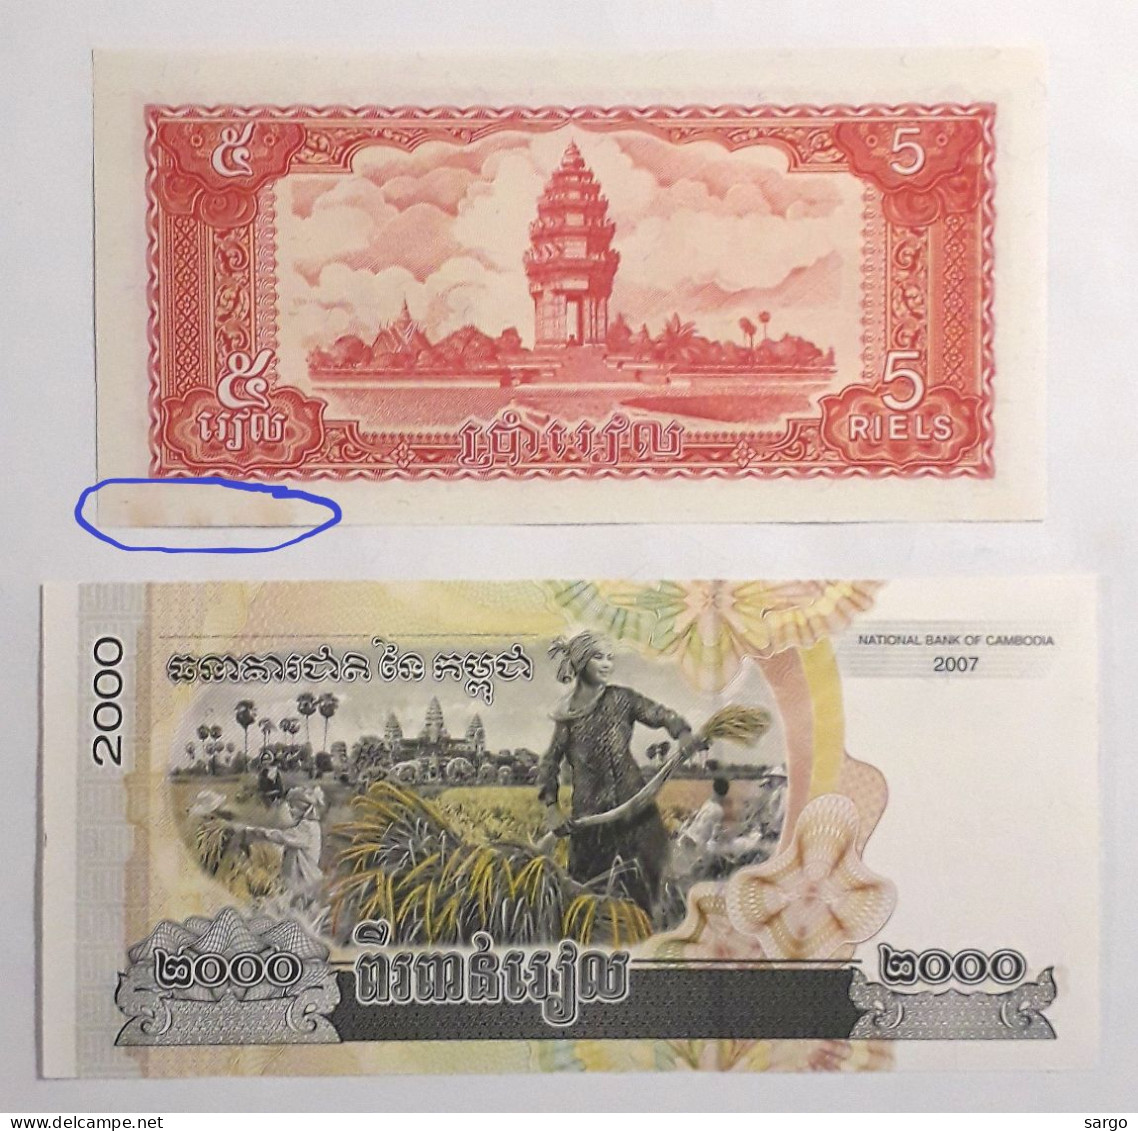 CAMBODIA - 5,2.000 RIELS - PIC 33, PIC 59 (1997-2007) - UNC - 2 PCS - BANKNOTES - PAPER MONEY - CARTAMONETA - - Cambodge